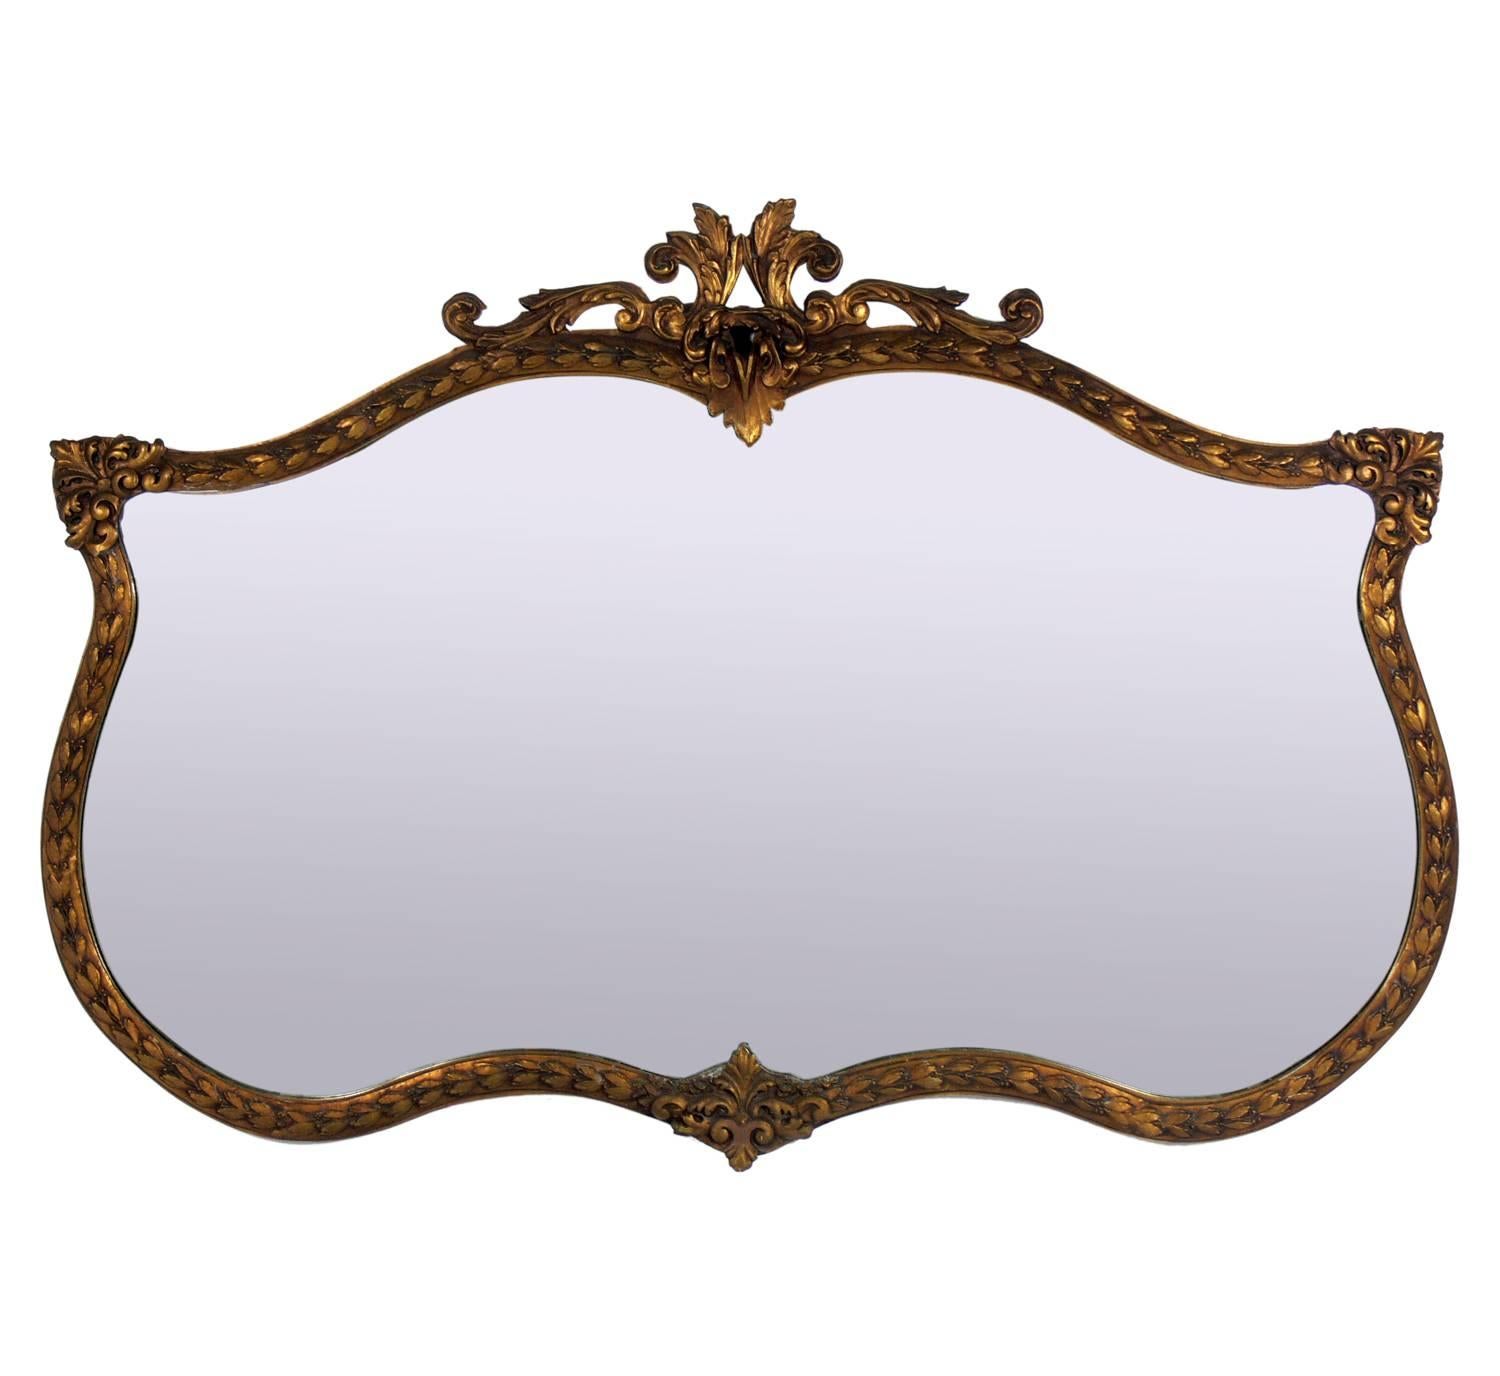 Large-Scale Ornate Gilt Mirror